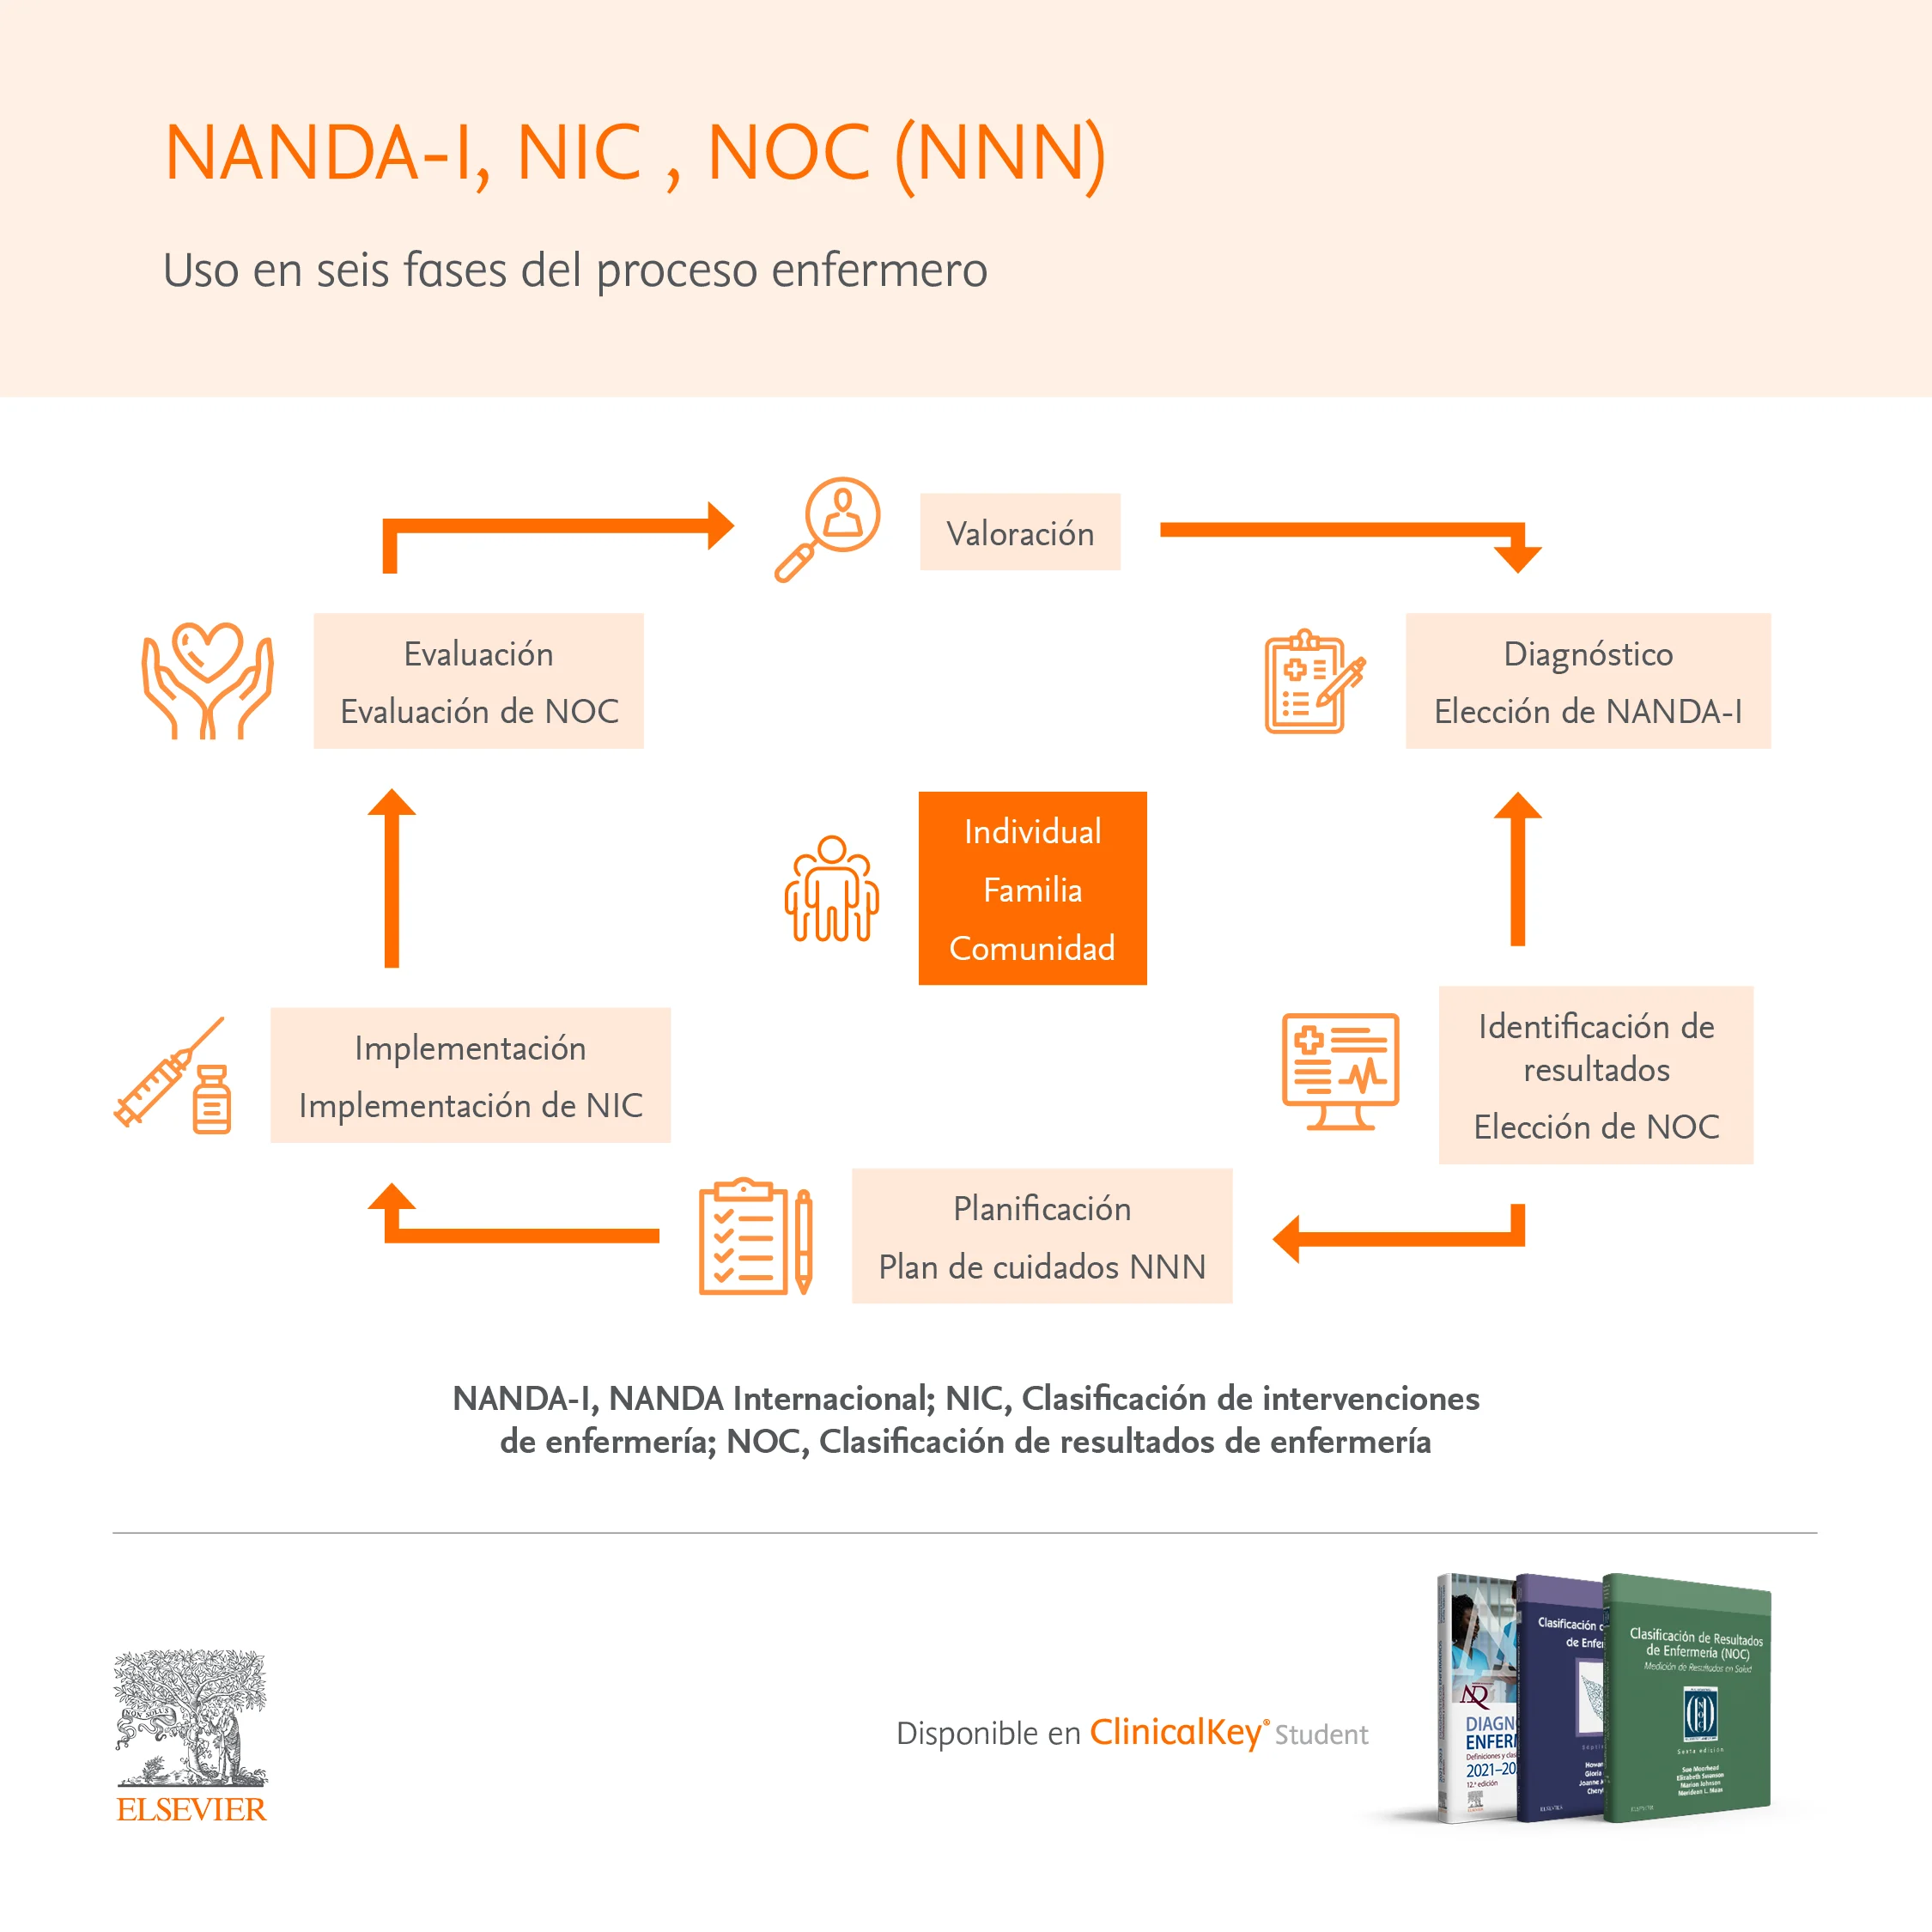 NANDA-I, NIC, NOC (NNN)